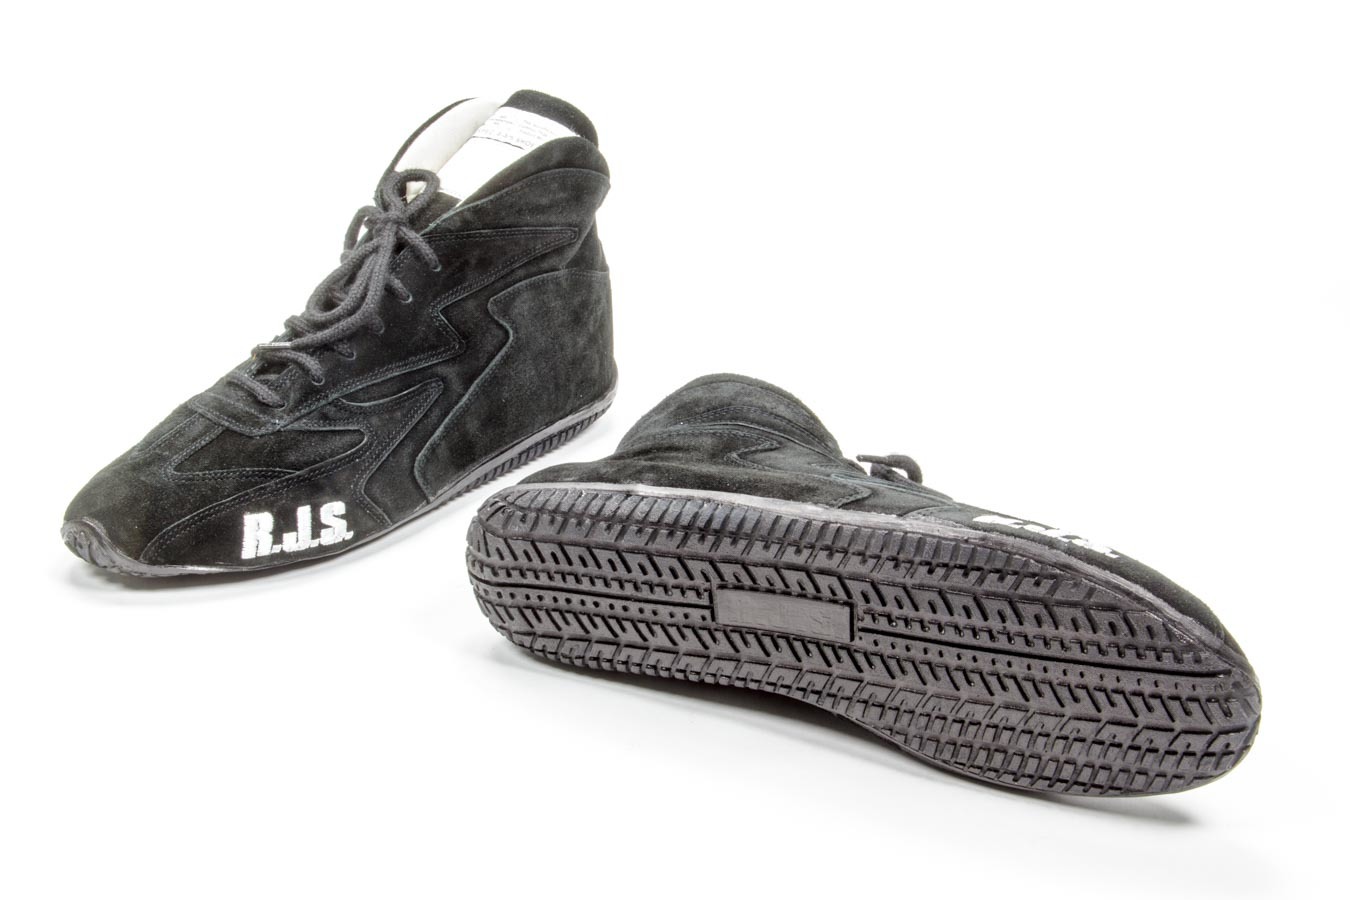 RJS, Redline Racing Shoe Mid-Top Black Size 15 SFI-5